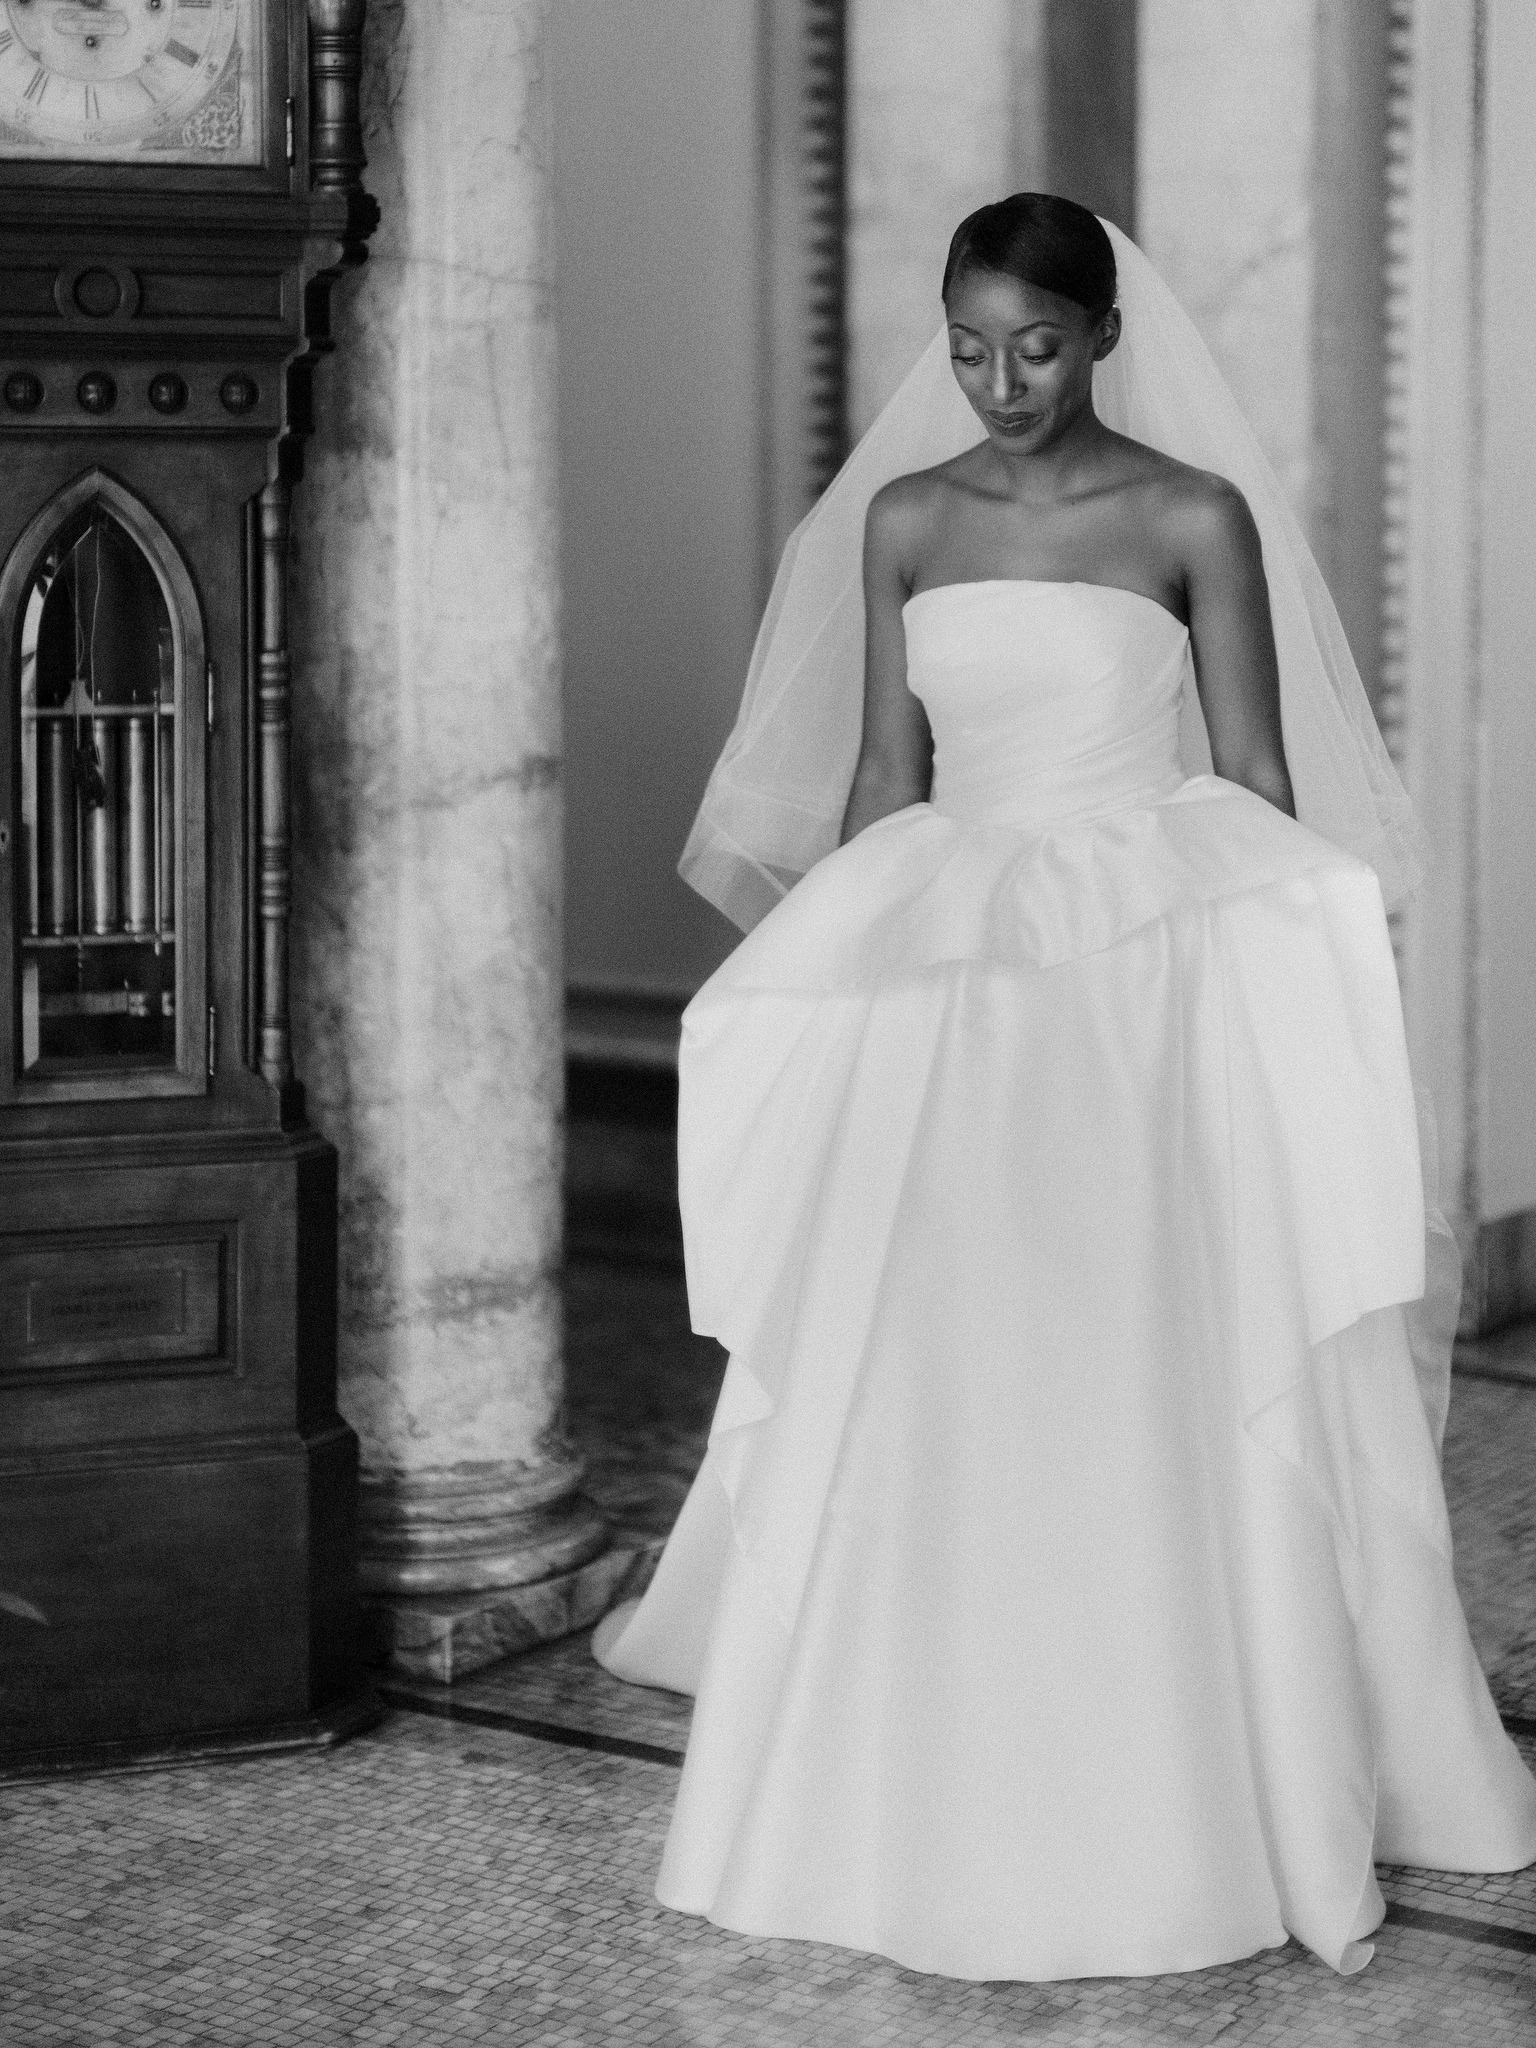 Finding Your Wedding Dress · Jenny Fu - New York Wedding Photographer